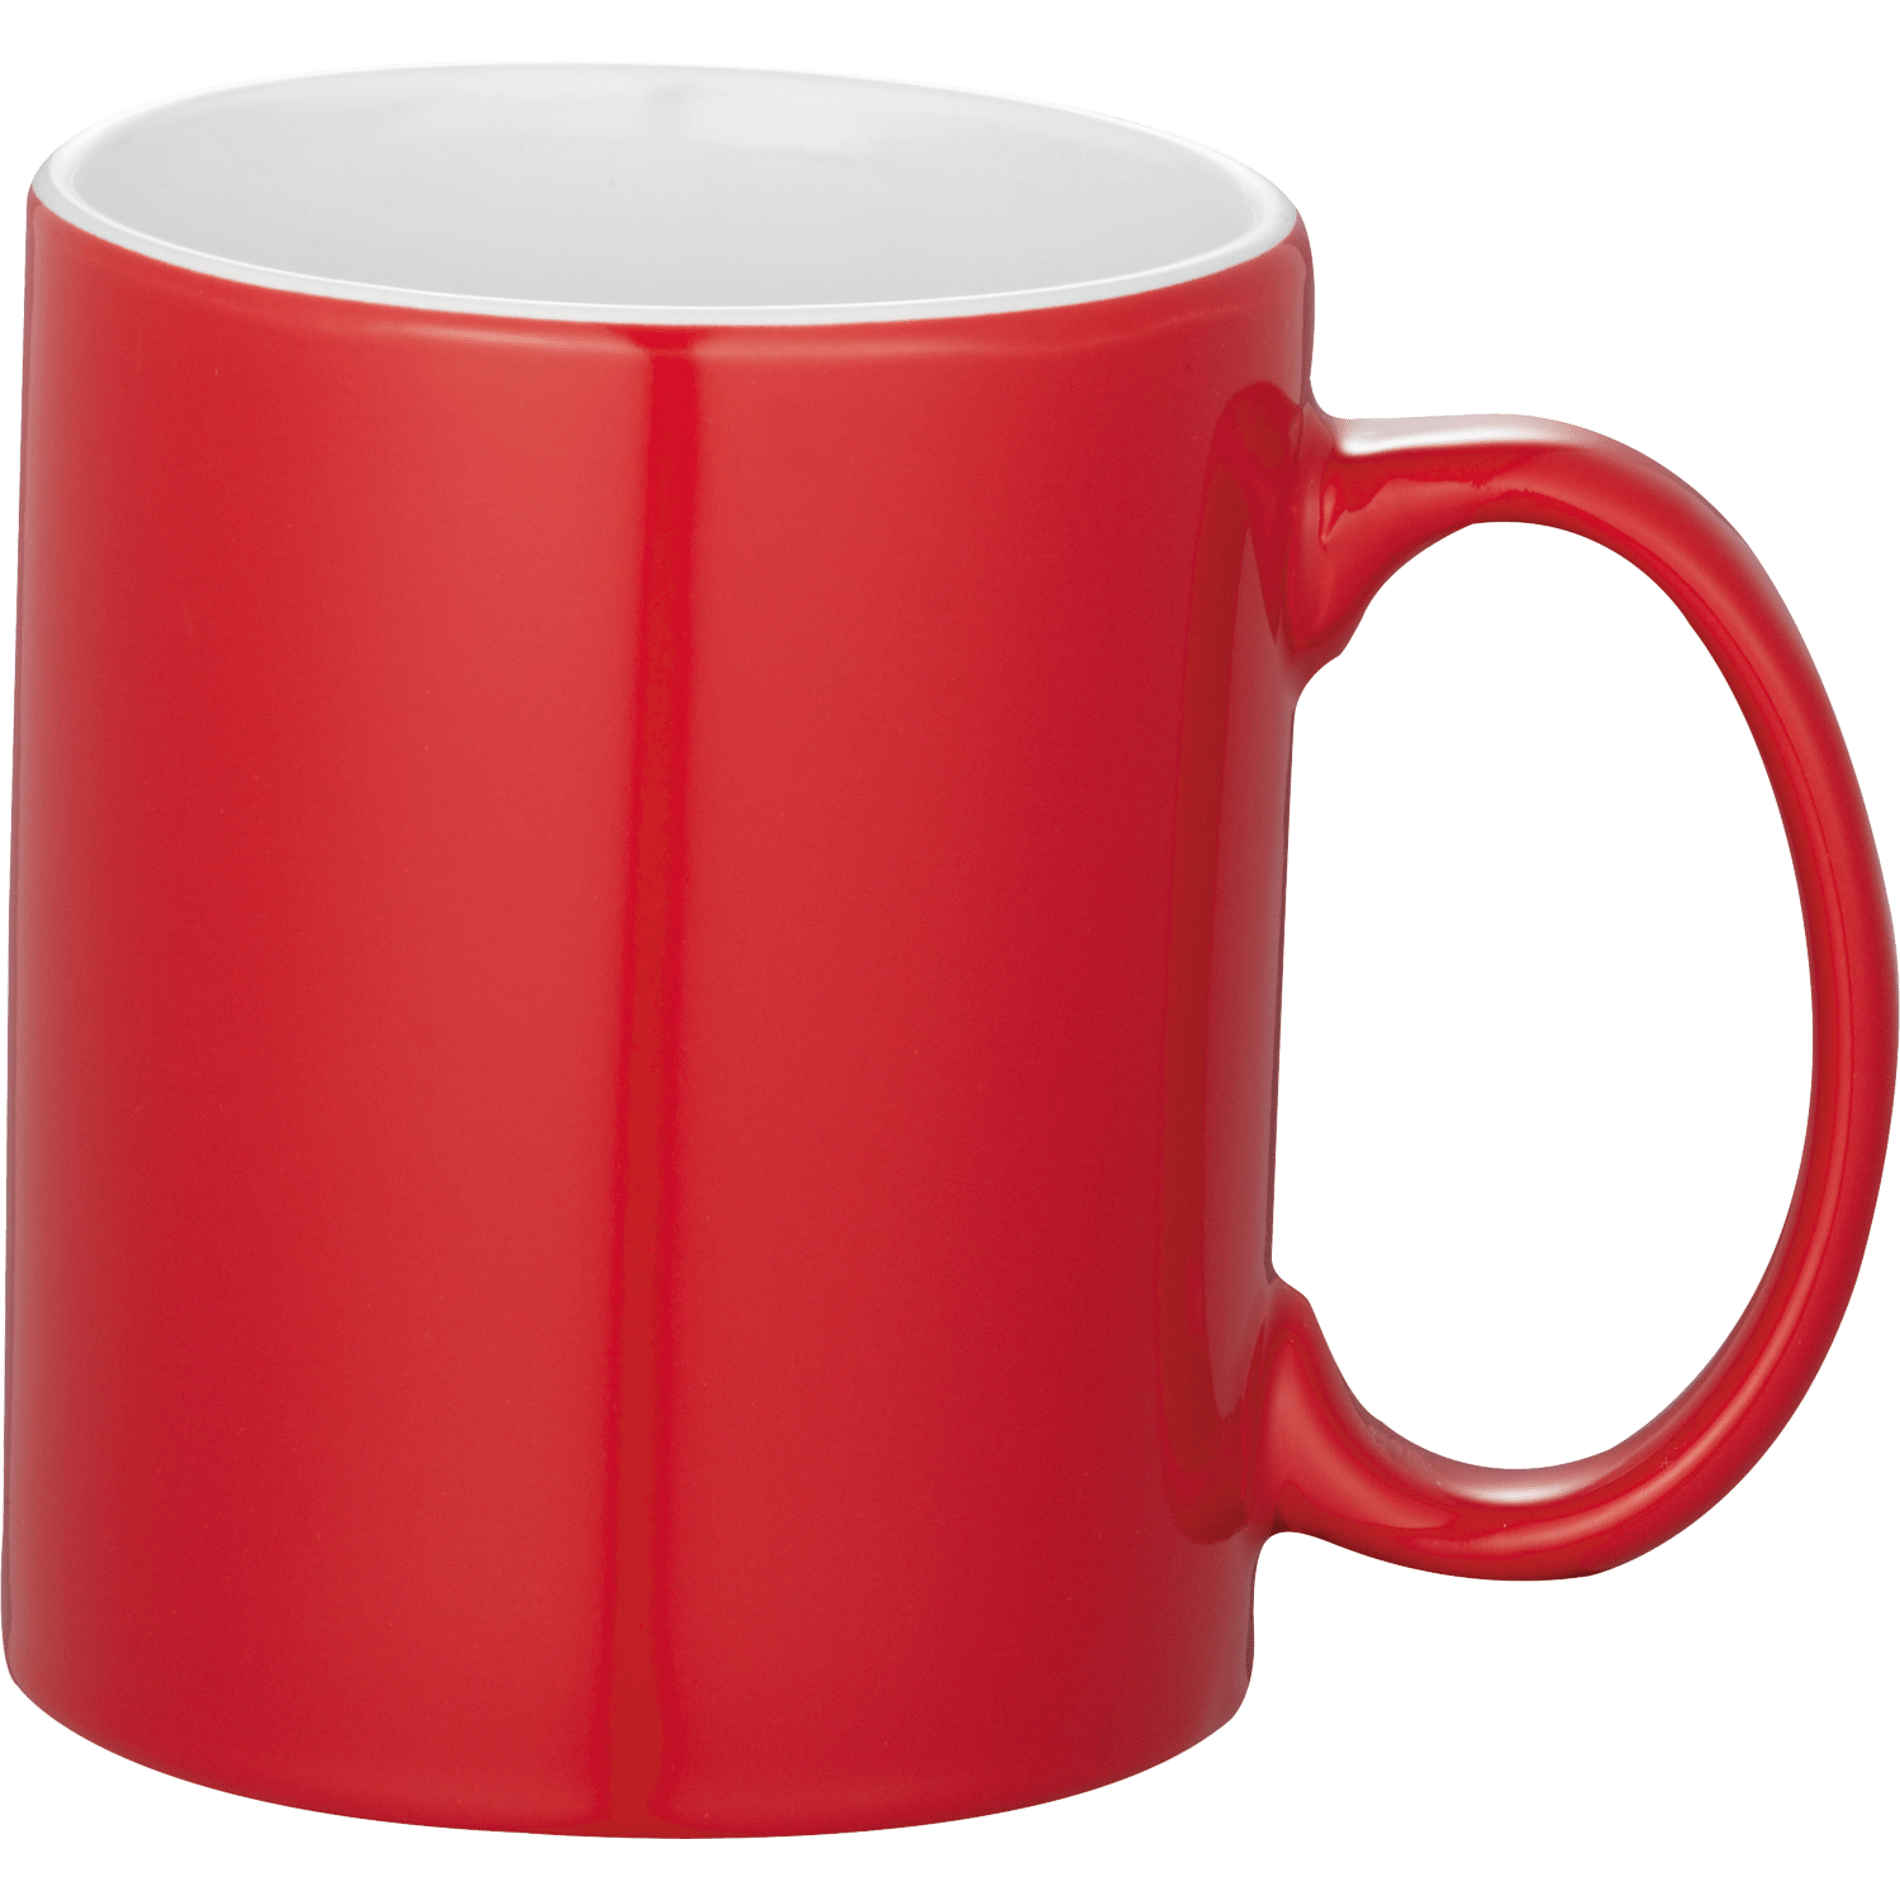 Bullet SM-6321 - Bounty Spirit 11oz Ceramic Mug $2.78 - Drinkware